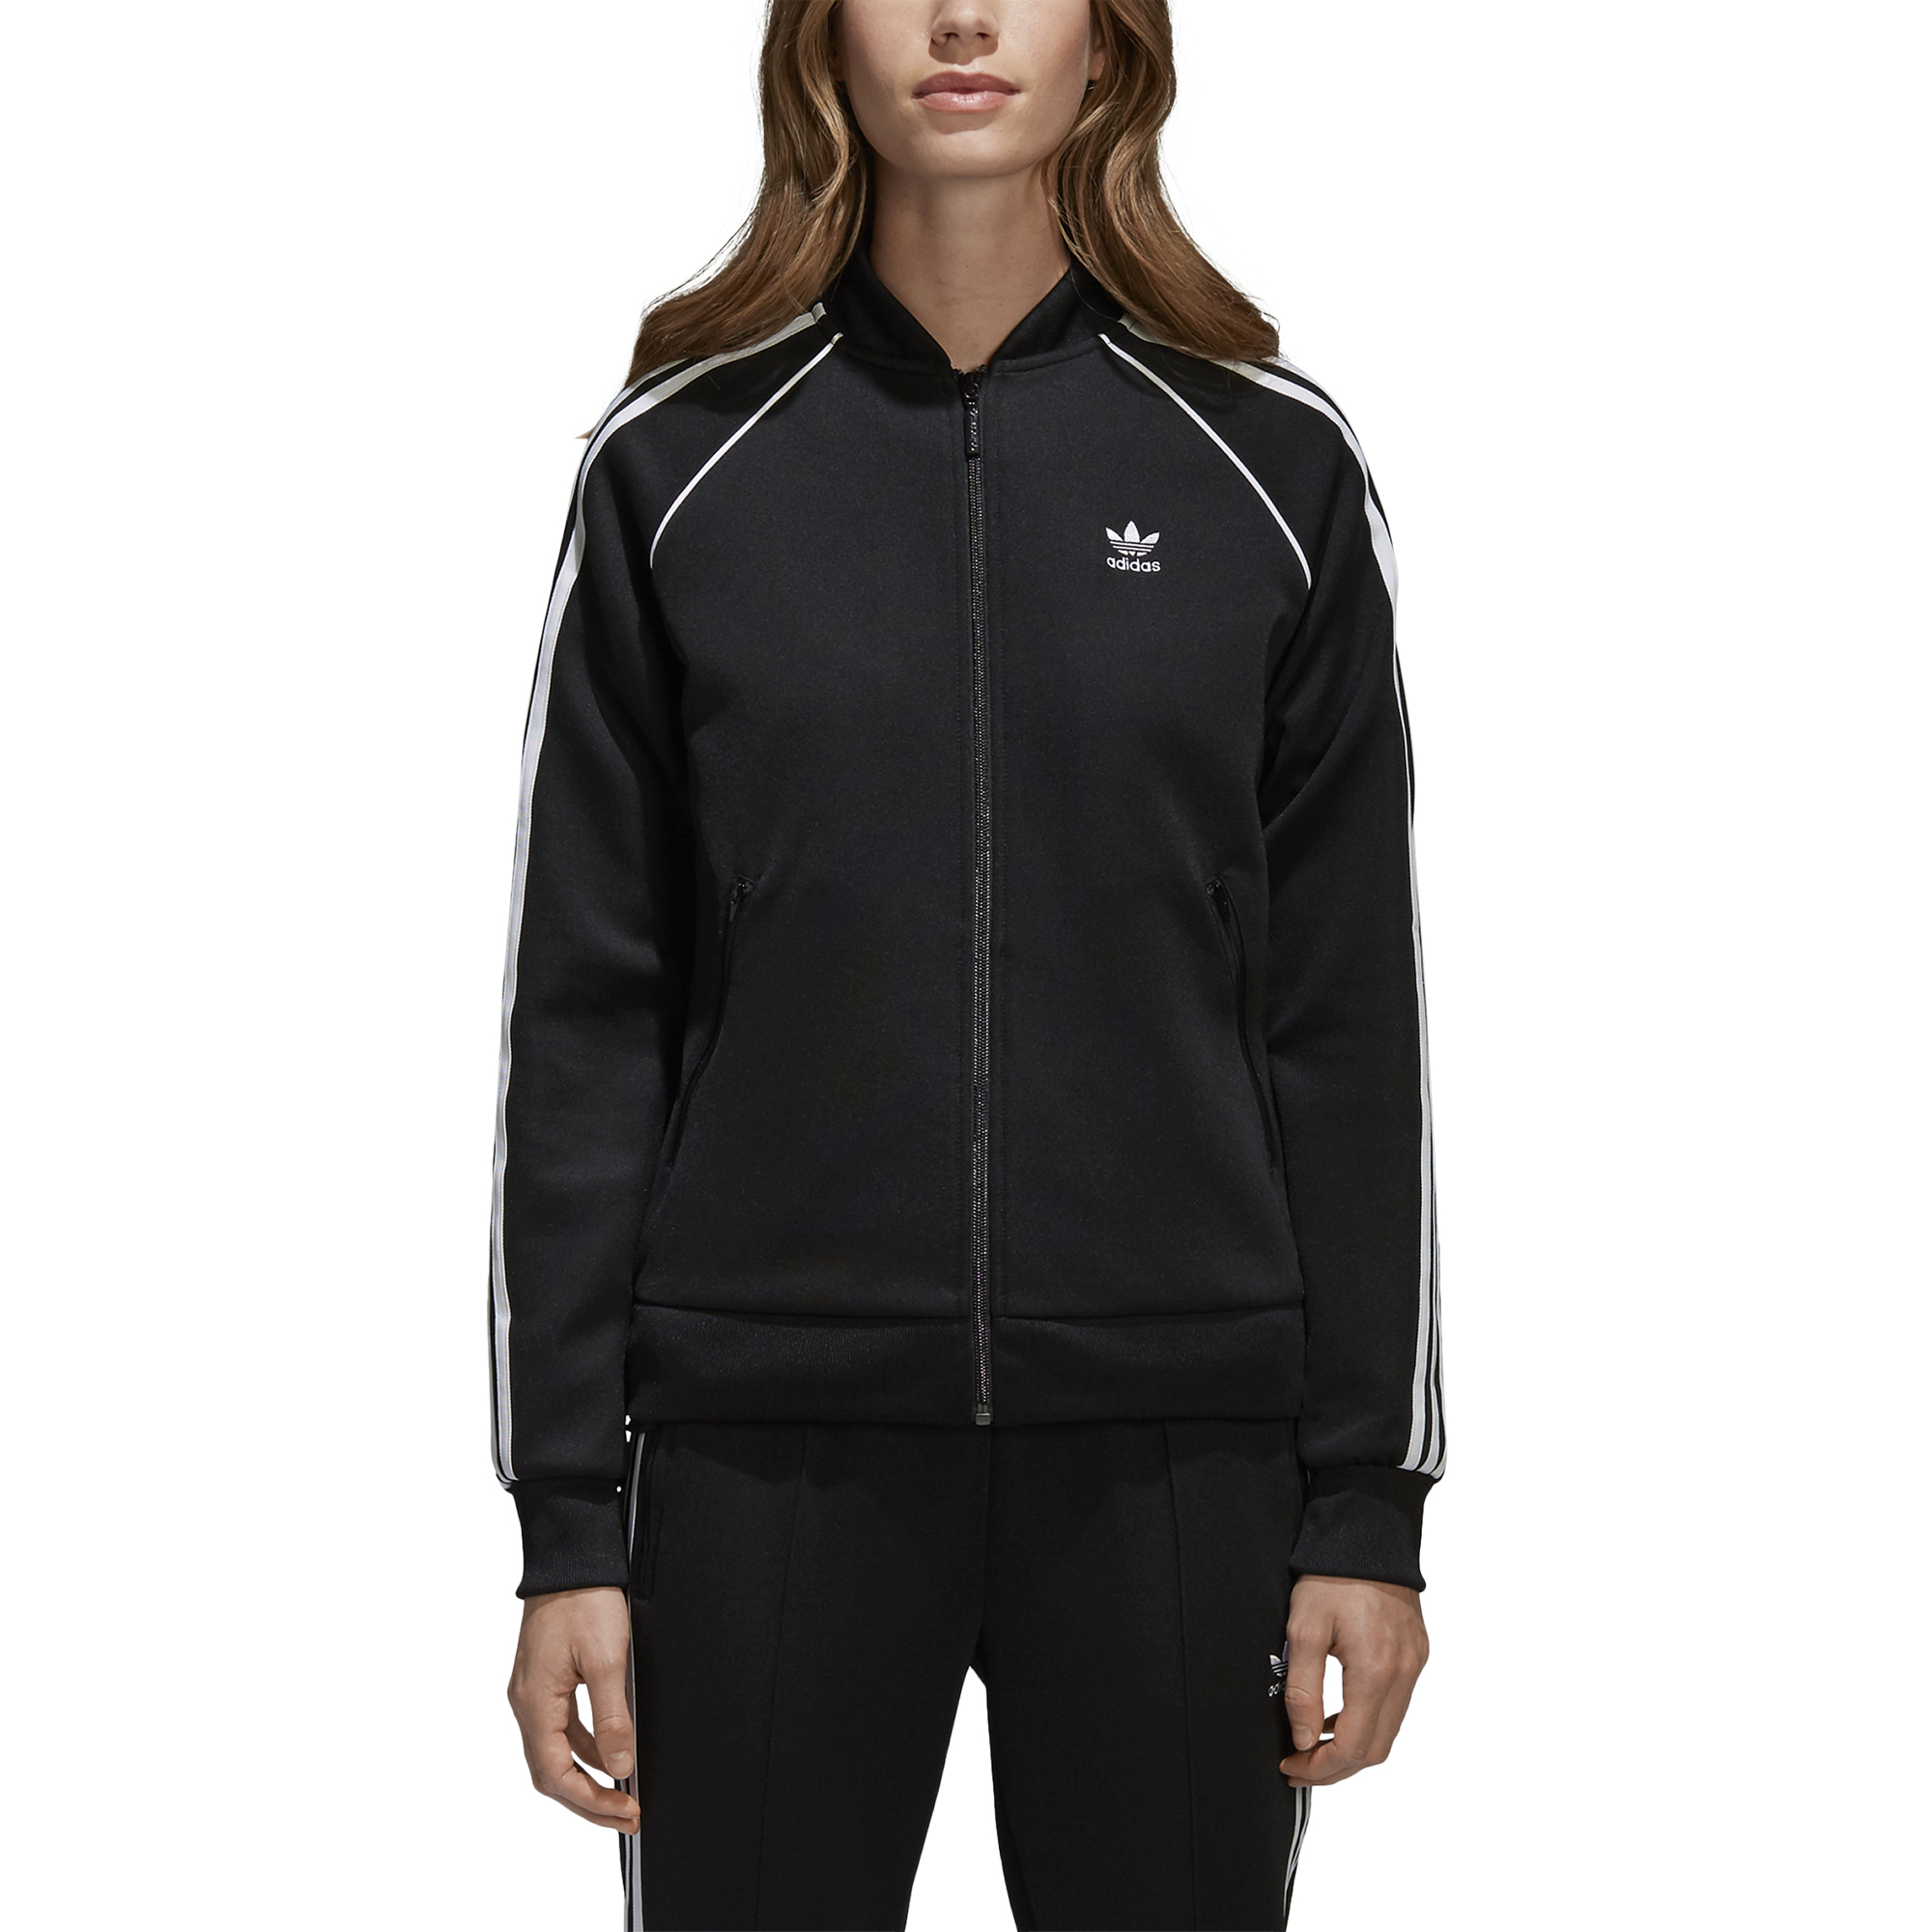 Adidas Womens SST Track Jacket Black 